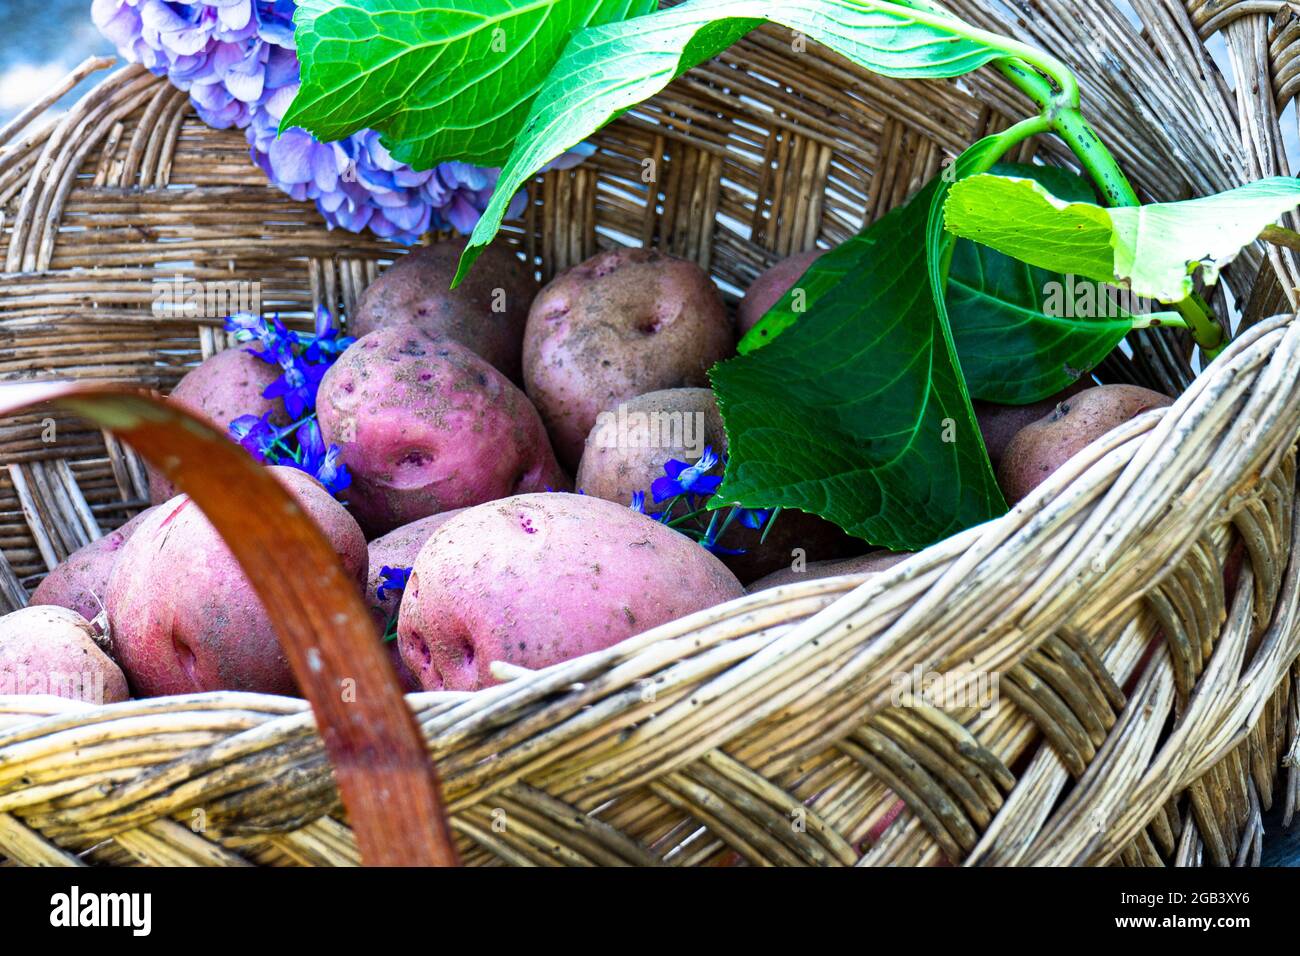 red potatoes inside a wicker basket Stock Photo